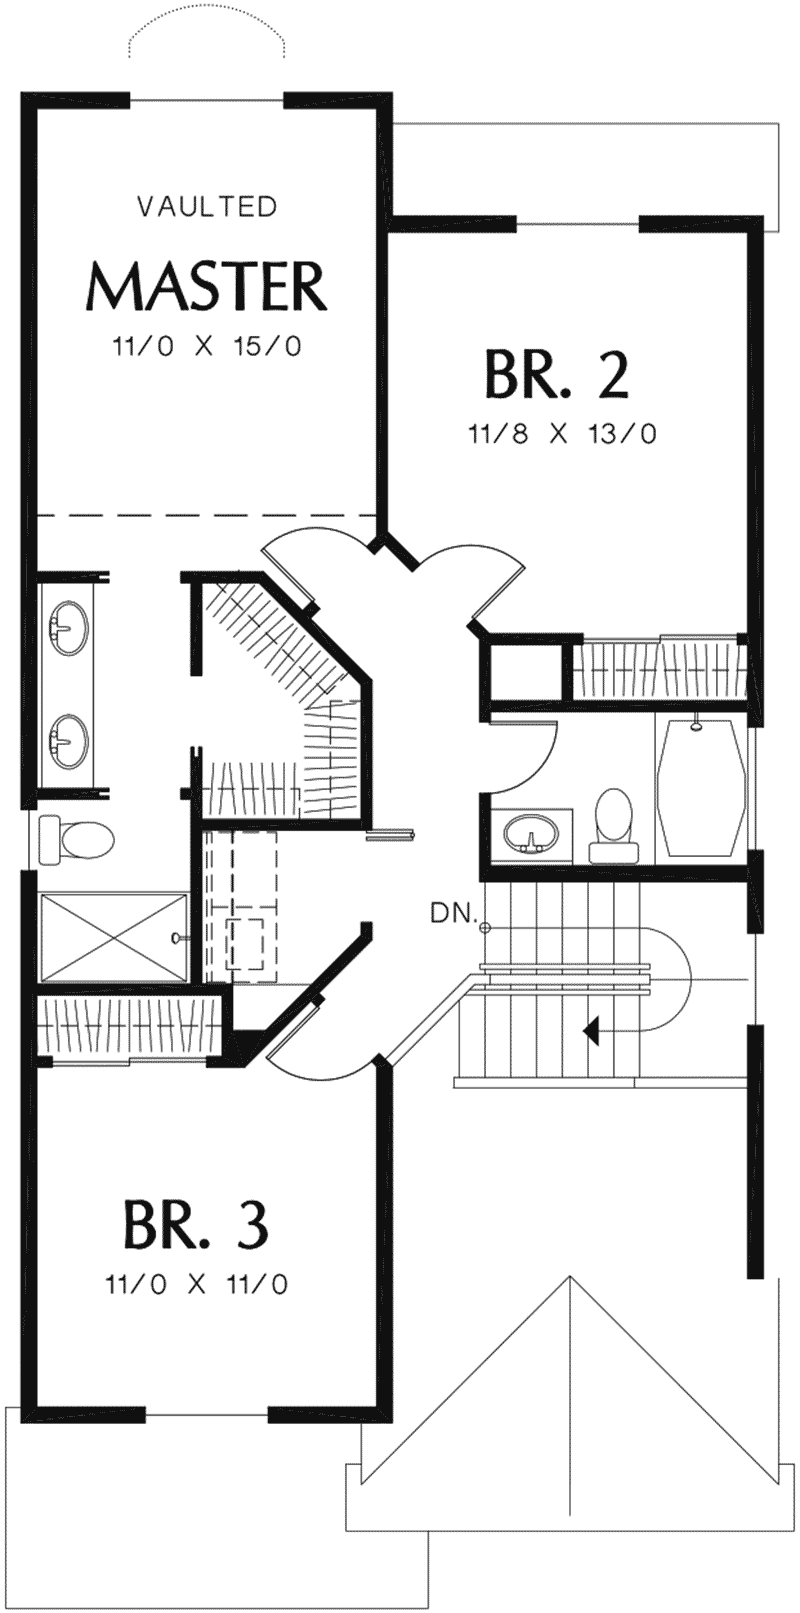 Craftsman House Plan Second Floor - Larkin Lane Craftsman Home  011D-0367 | House Plans and More